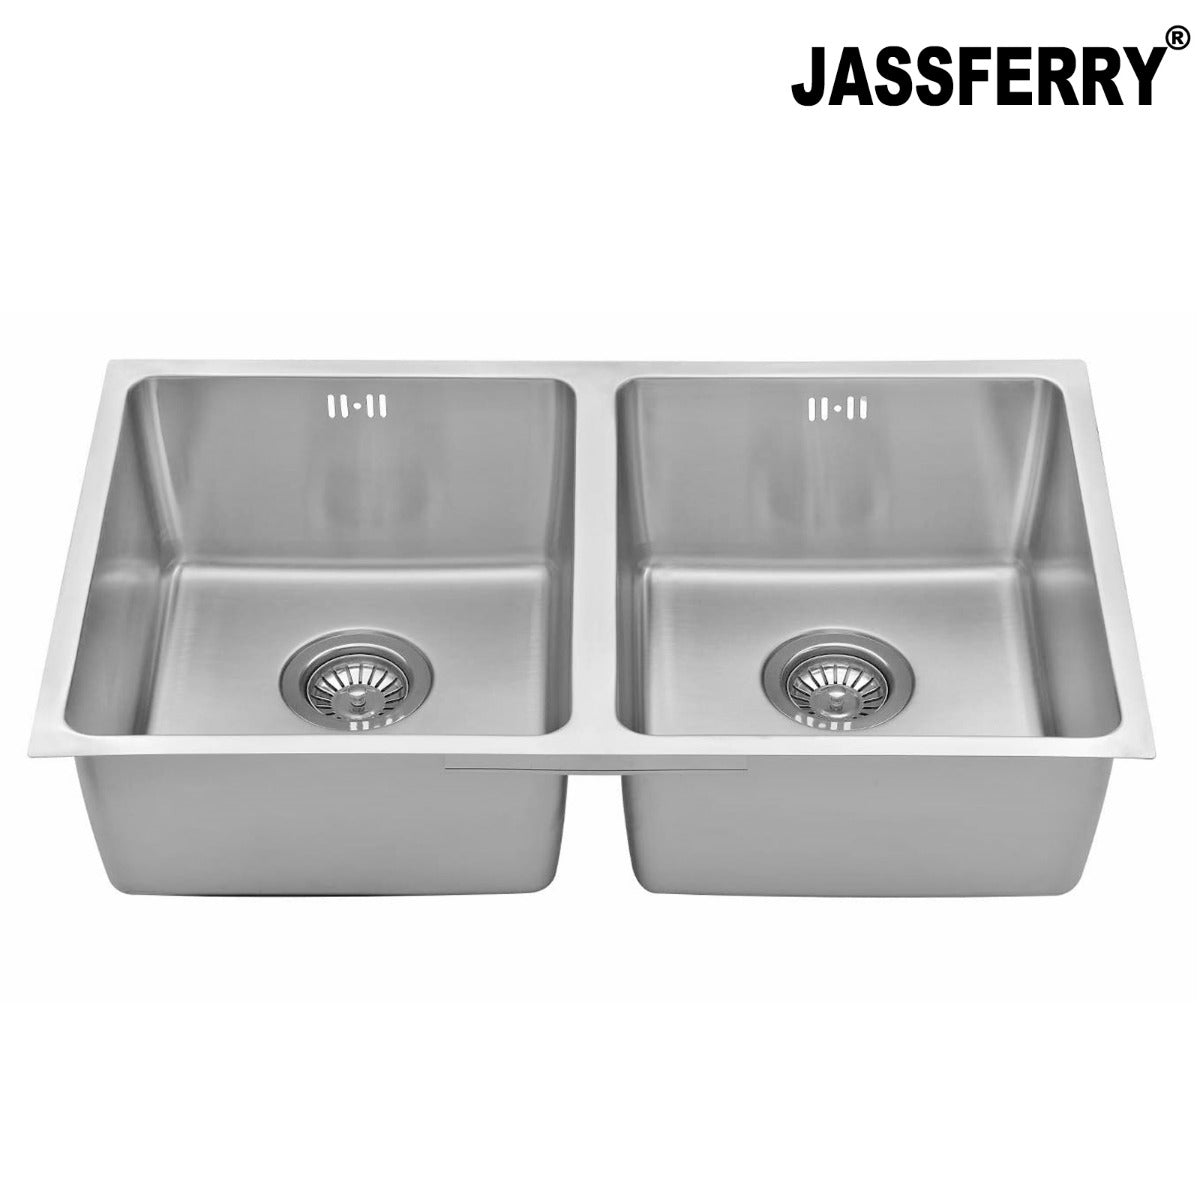 JassferryJASSFERRY Undermount Stainless Steel Kitchen Sink Double Square Bowl - 982Kitchen Sinks